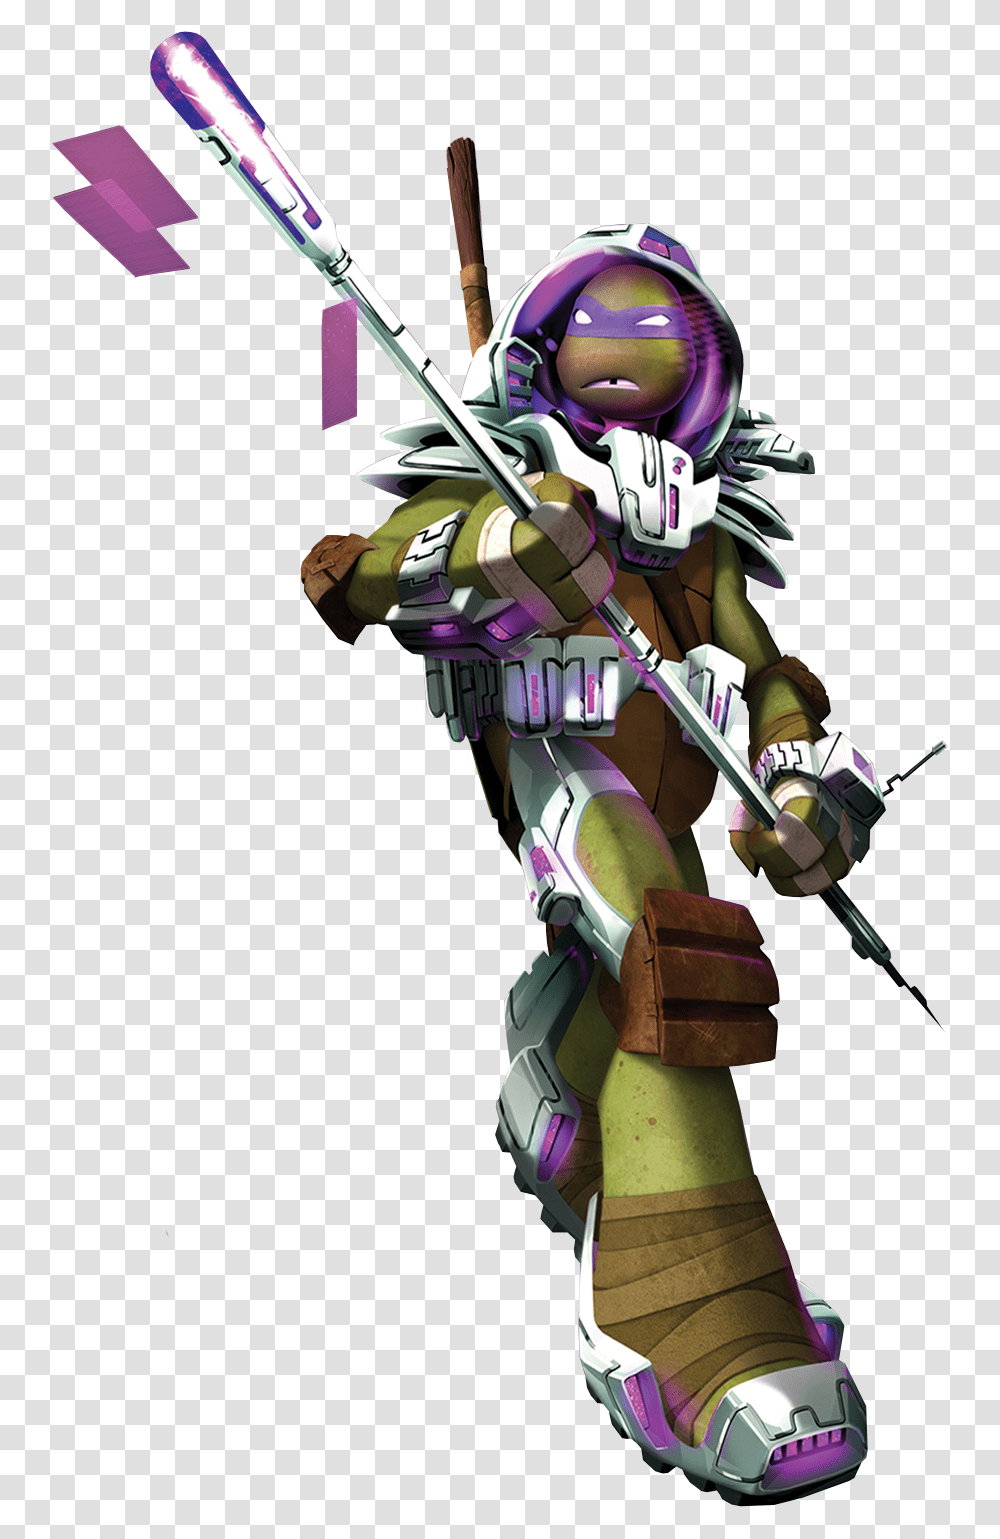 Dimension X Donatello Render Teenage Mutant Ninja Turtles, Toy, Helmet, Apparel Transparent Png